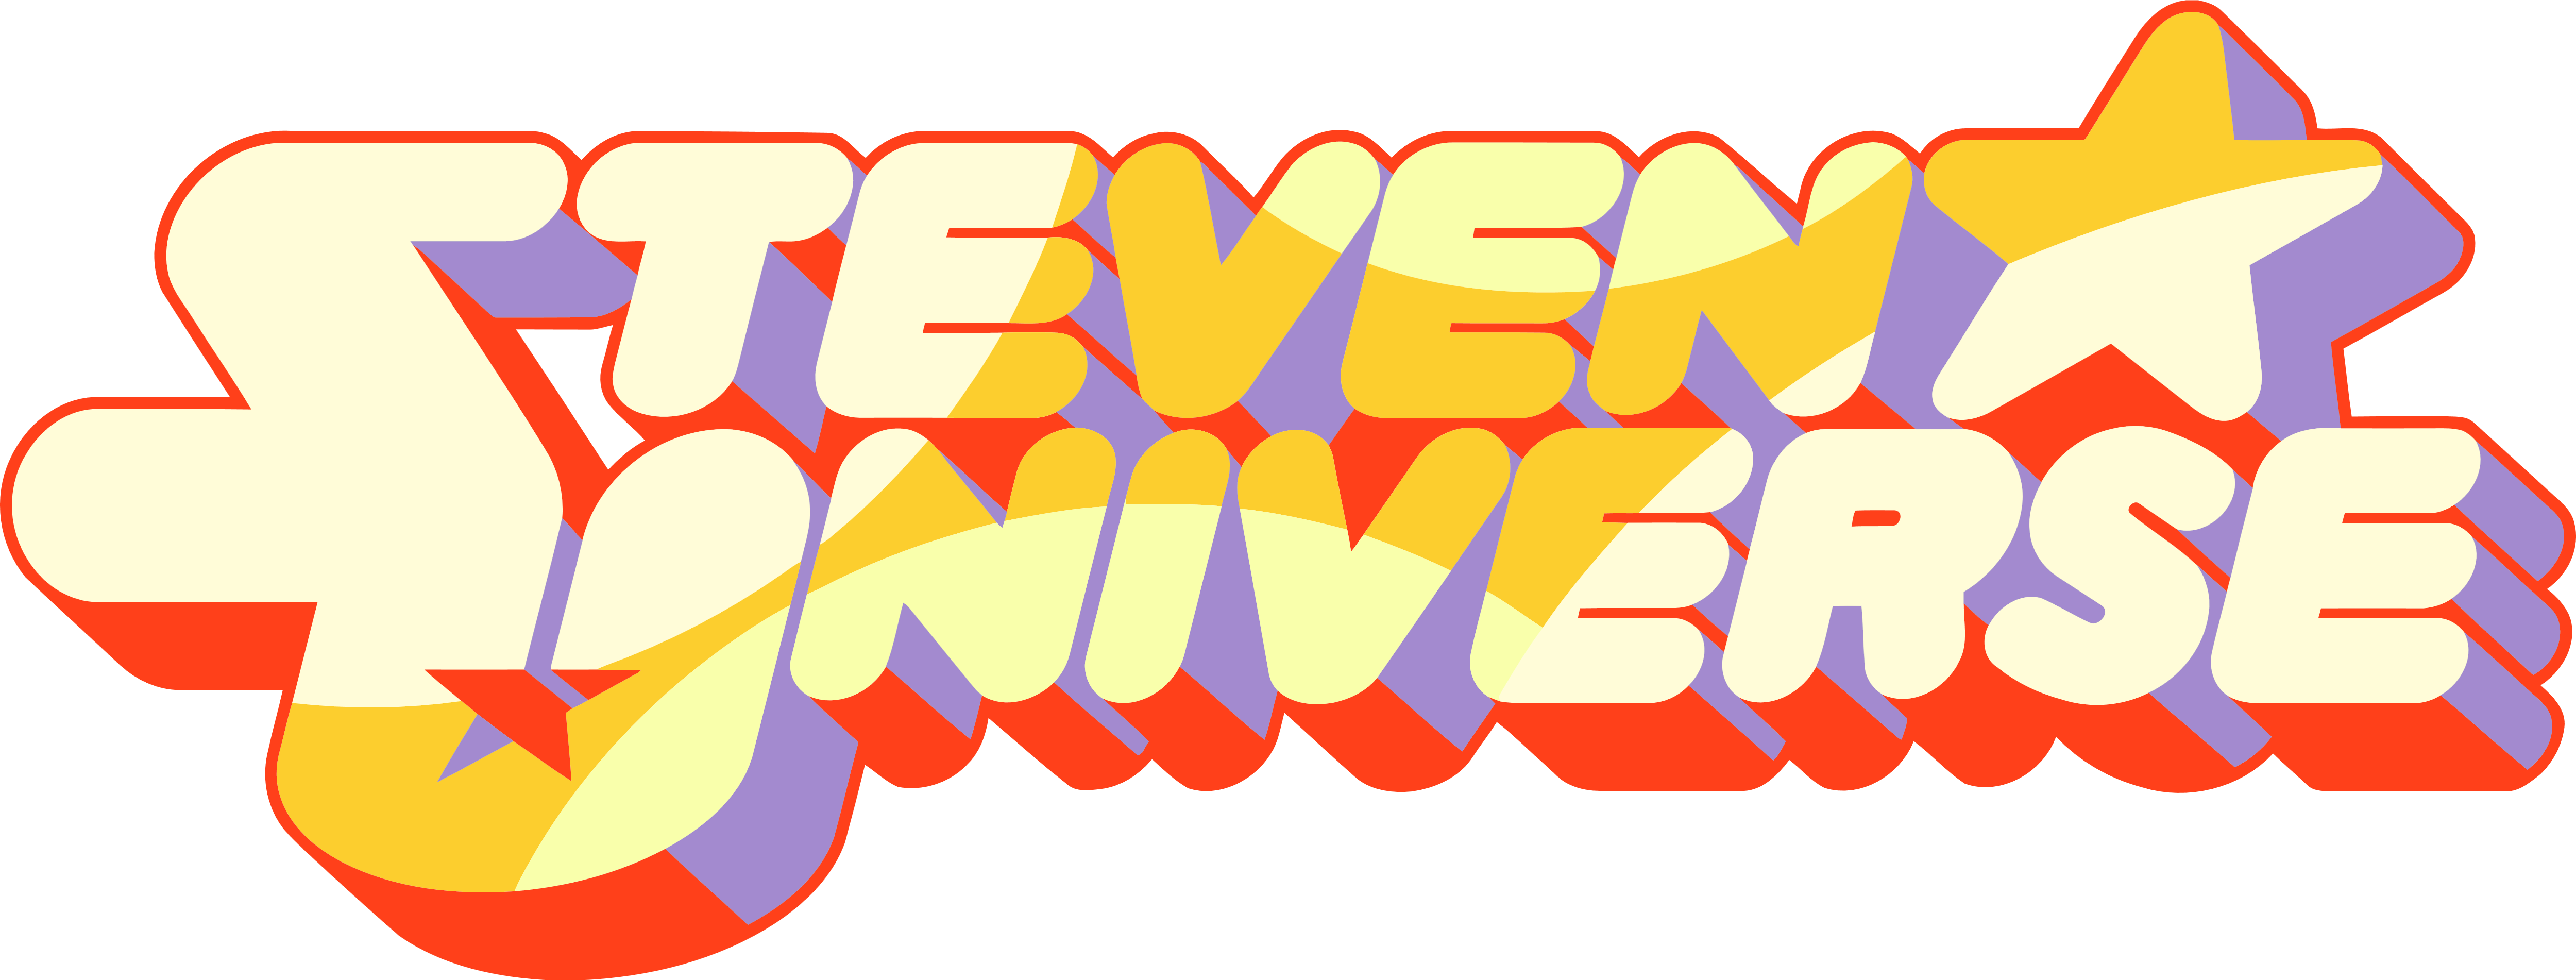 Steven Universe – Logos Download